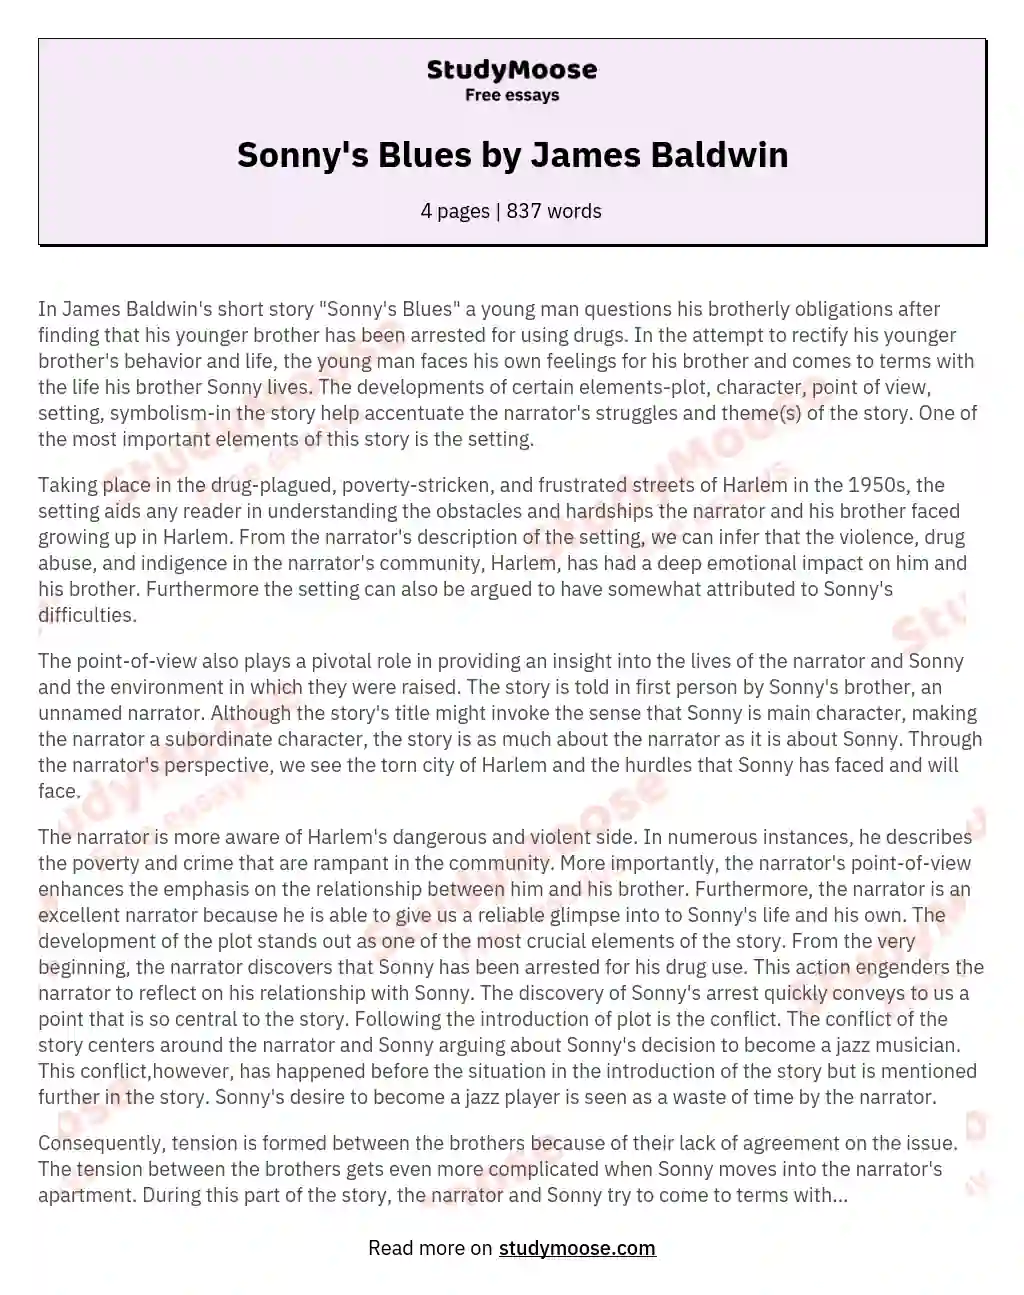 Sonny's Blues by James Baldwin essay